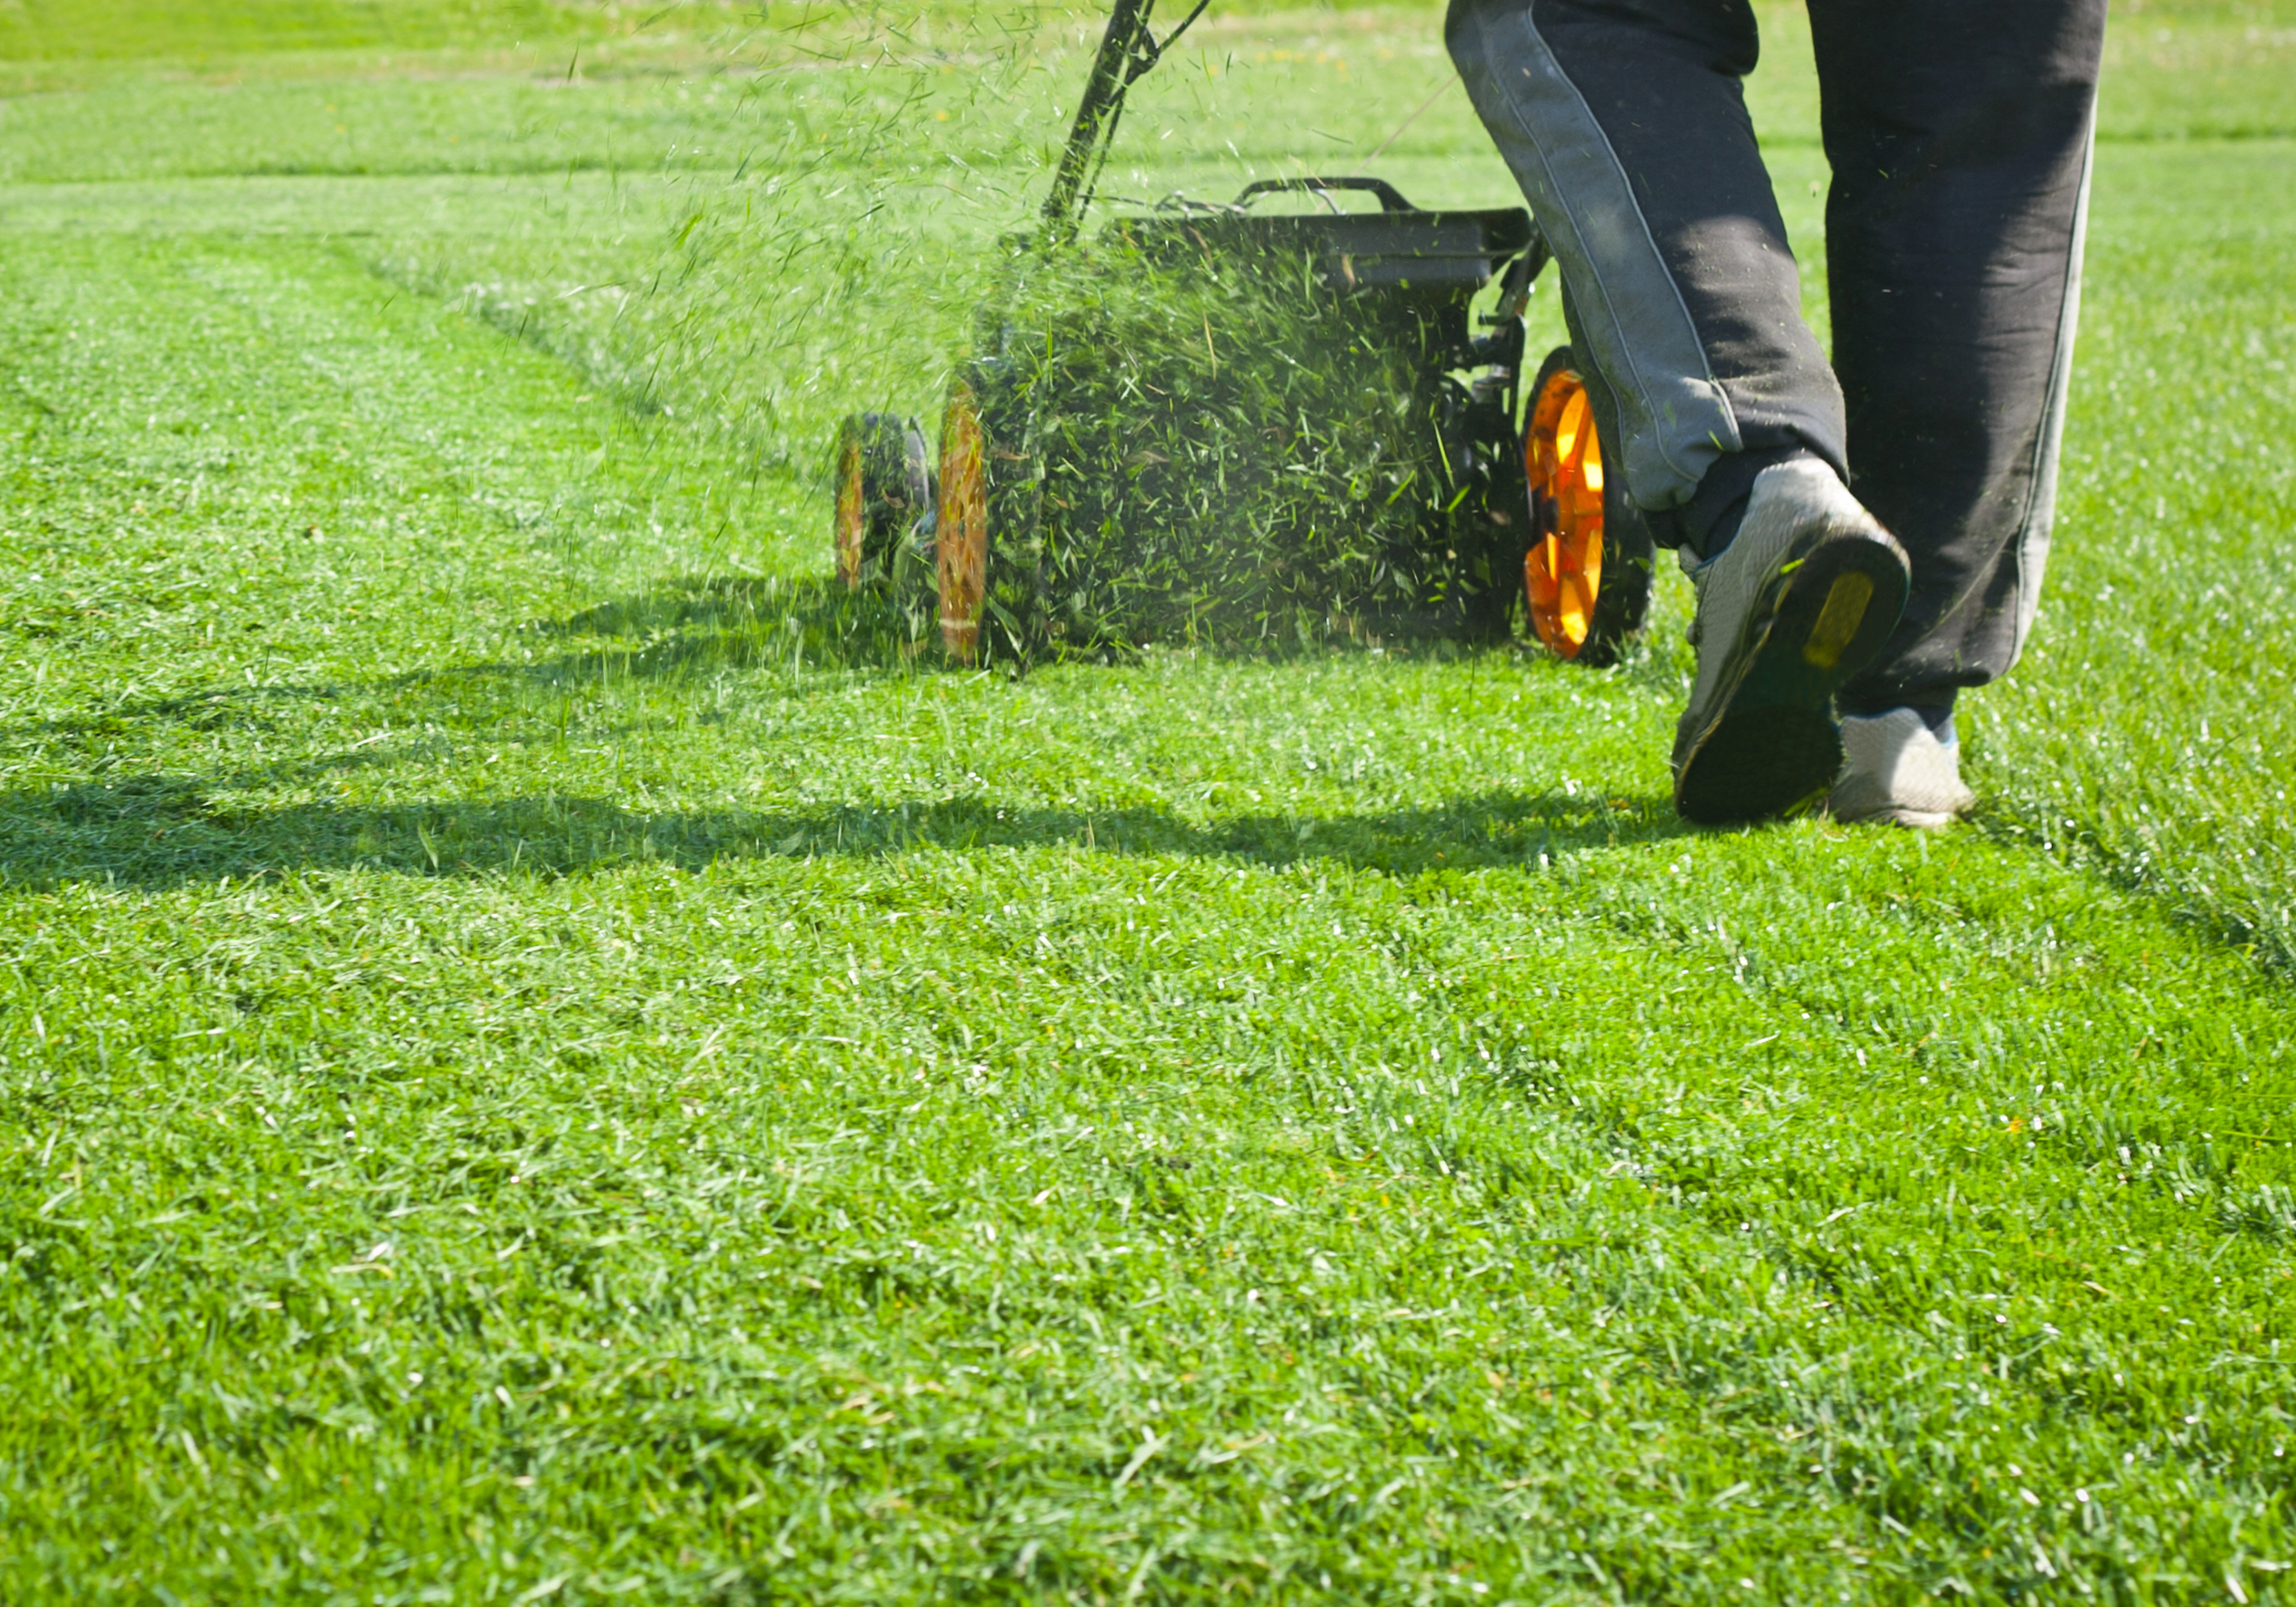 Mow the lawn. Стрижка газона. Газонокосилка на газоне. Косить газон. Покос газона.